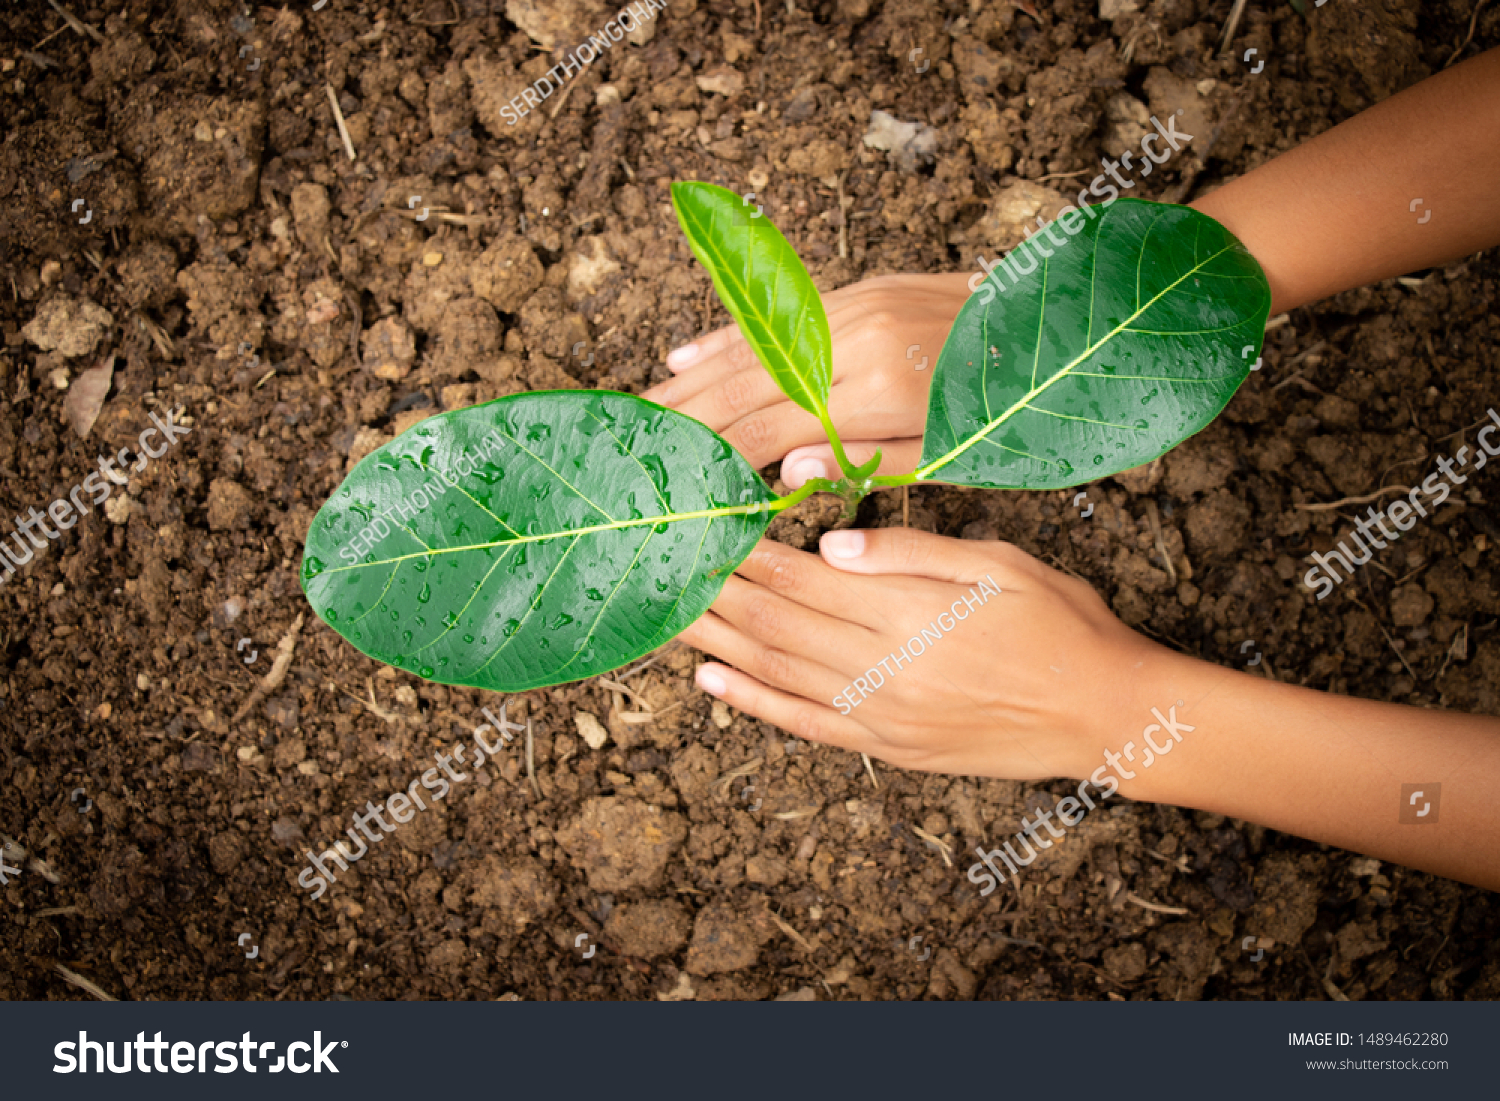 Planting trees, planting hands, planting trees, planting soil, saving earth and reducing global warming. #1489462280